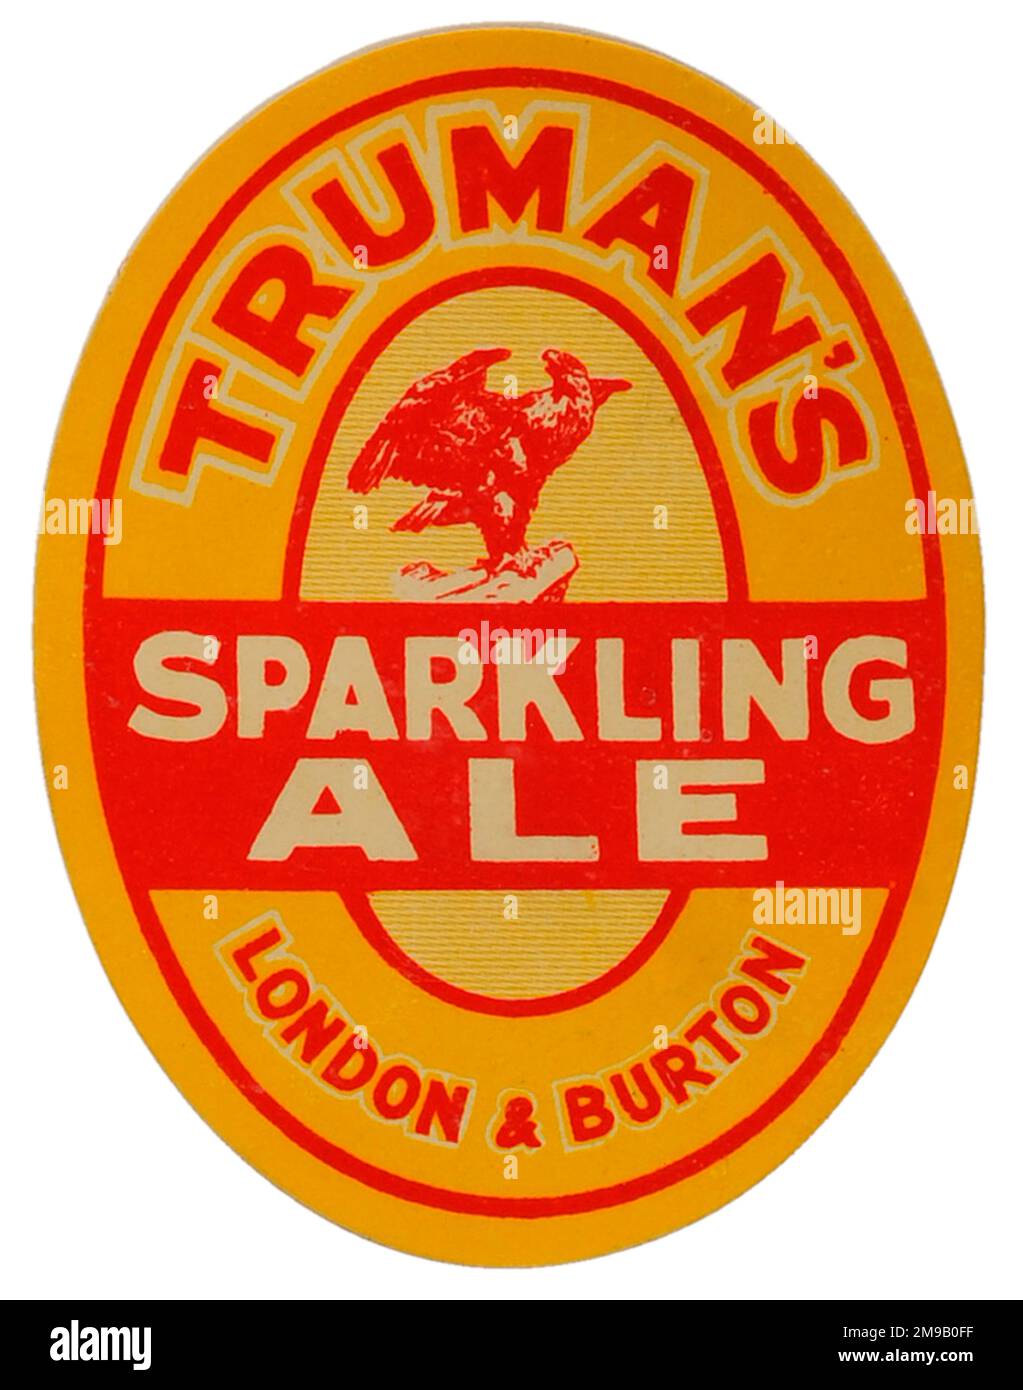 Truman's Sparkling Ale Stock Photo